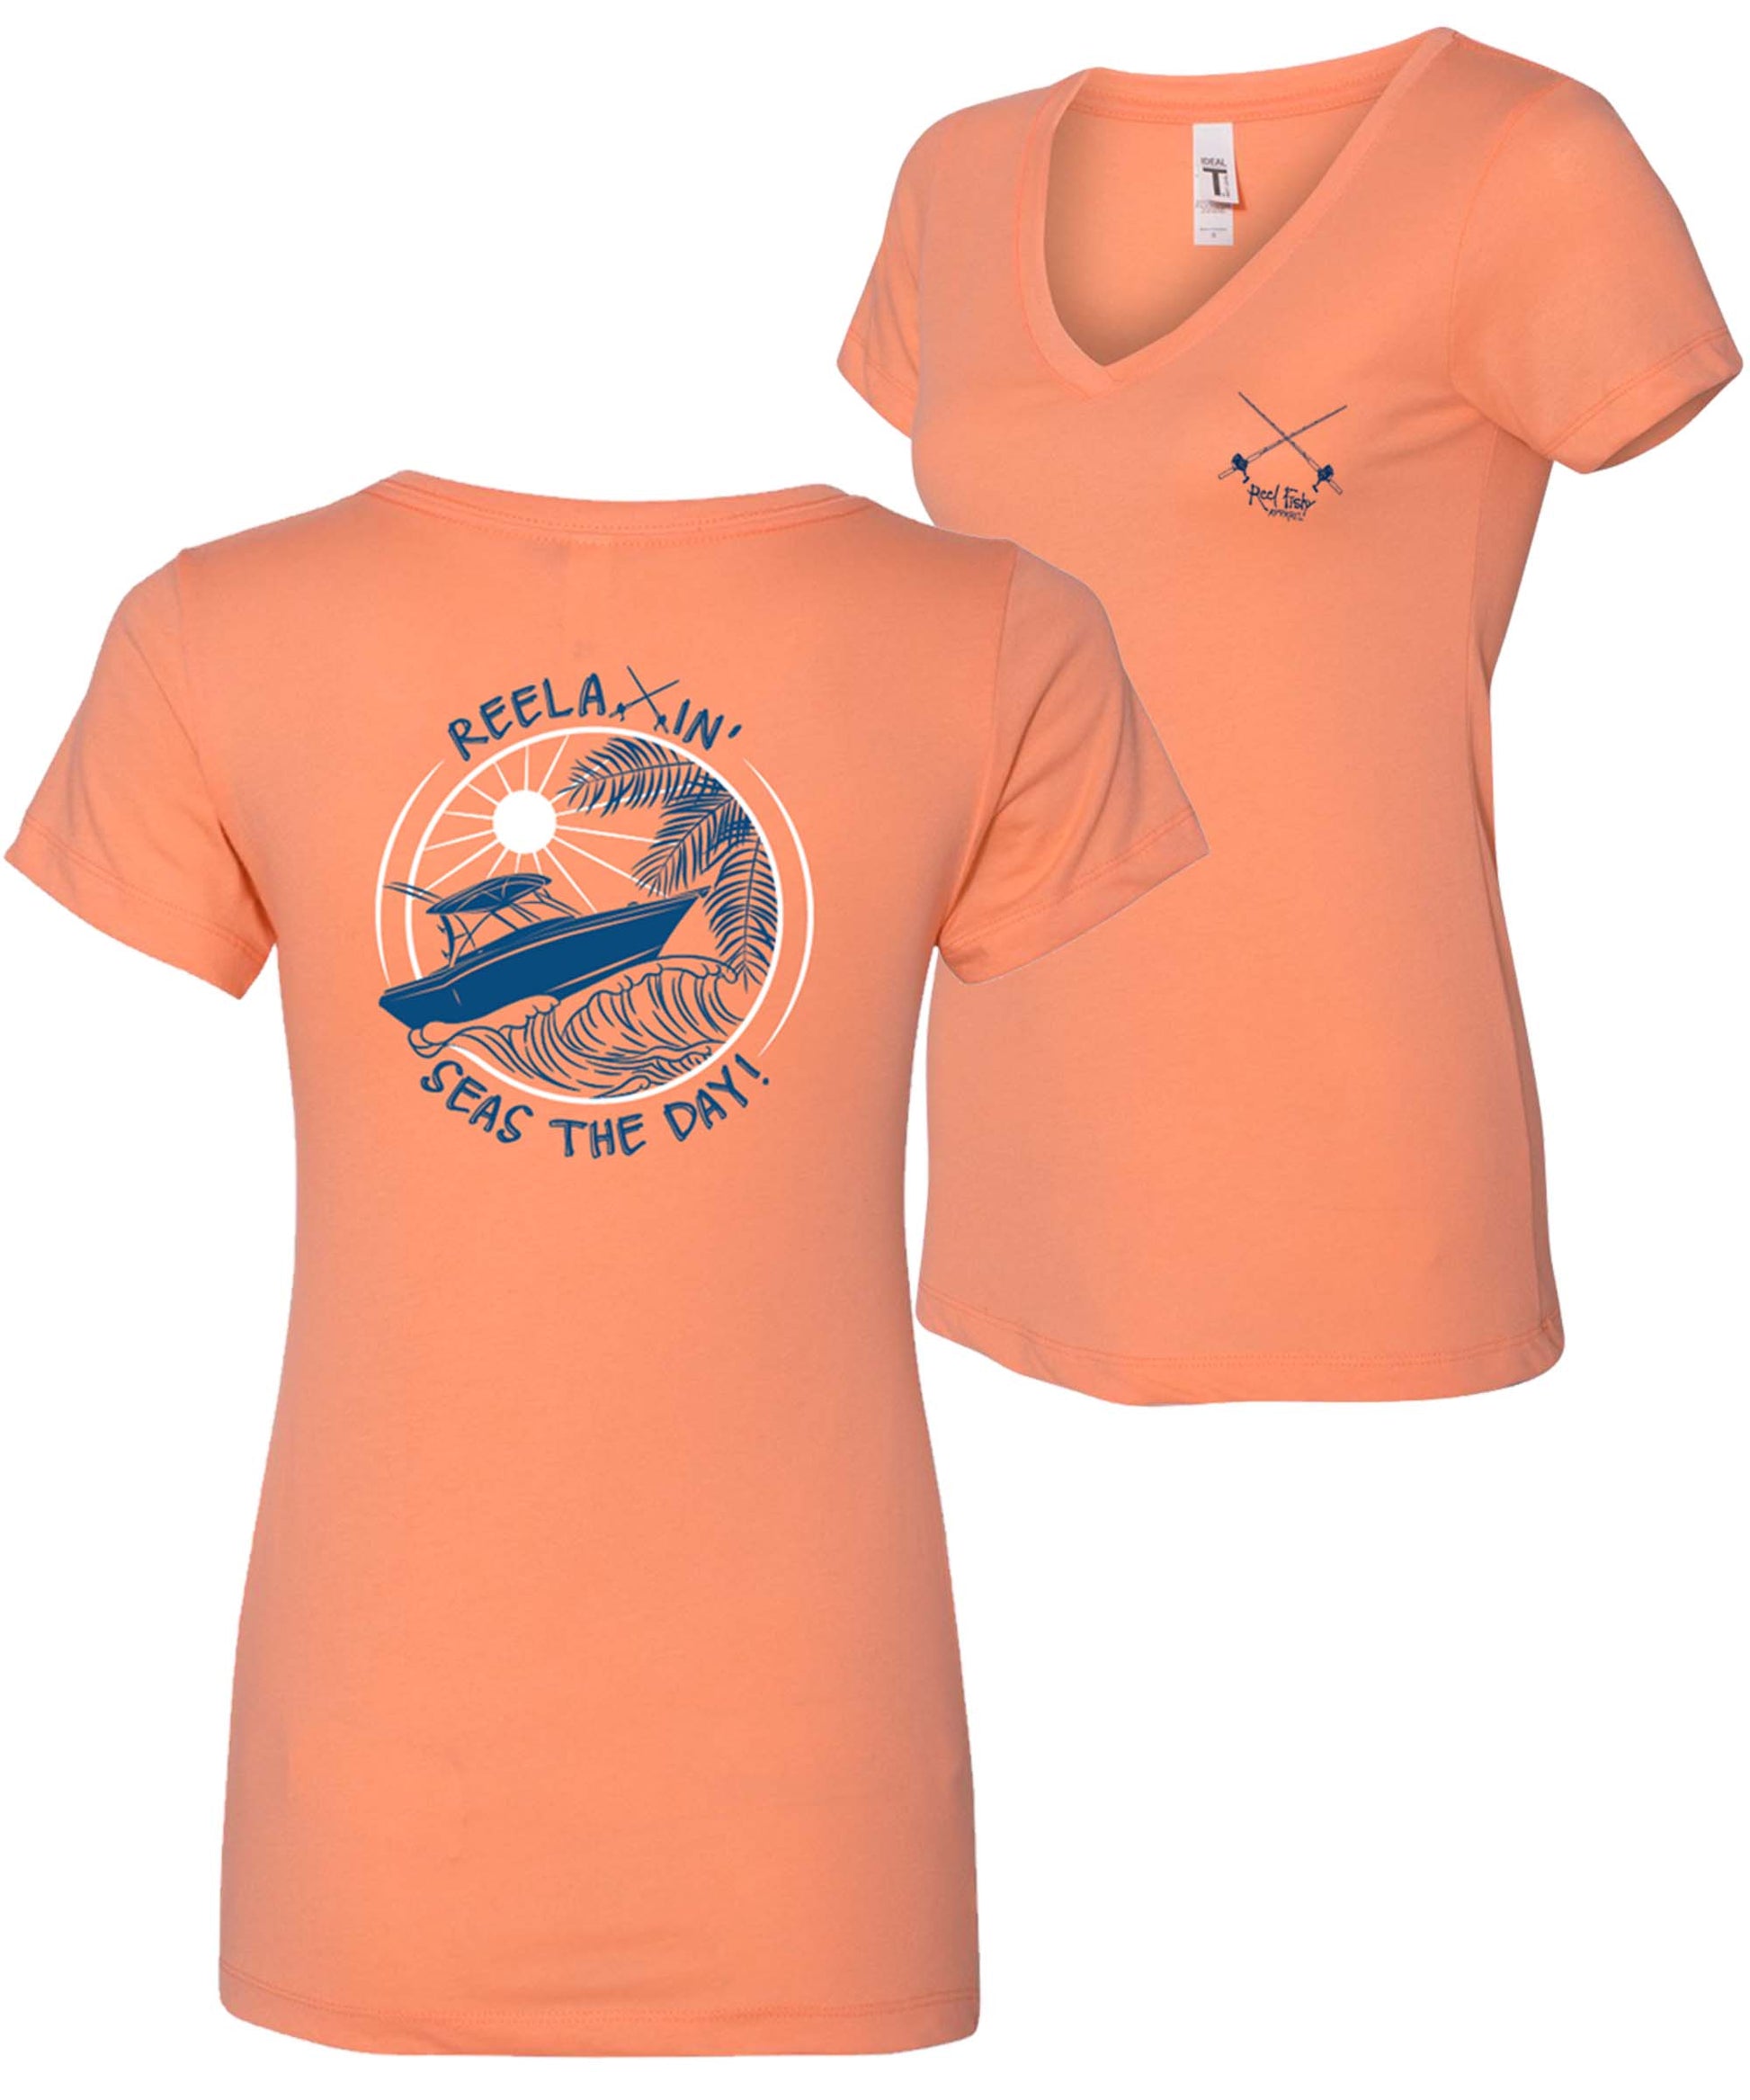 Ladies Reelaxin' - Seas the Day v-neck cotton shirt in Orange